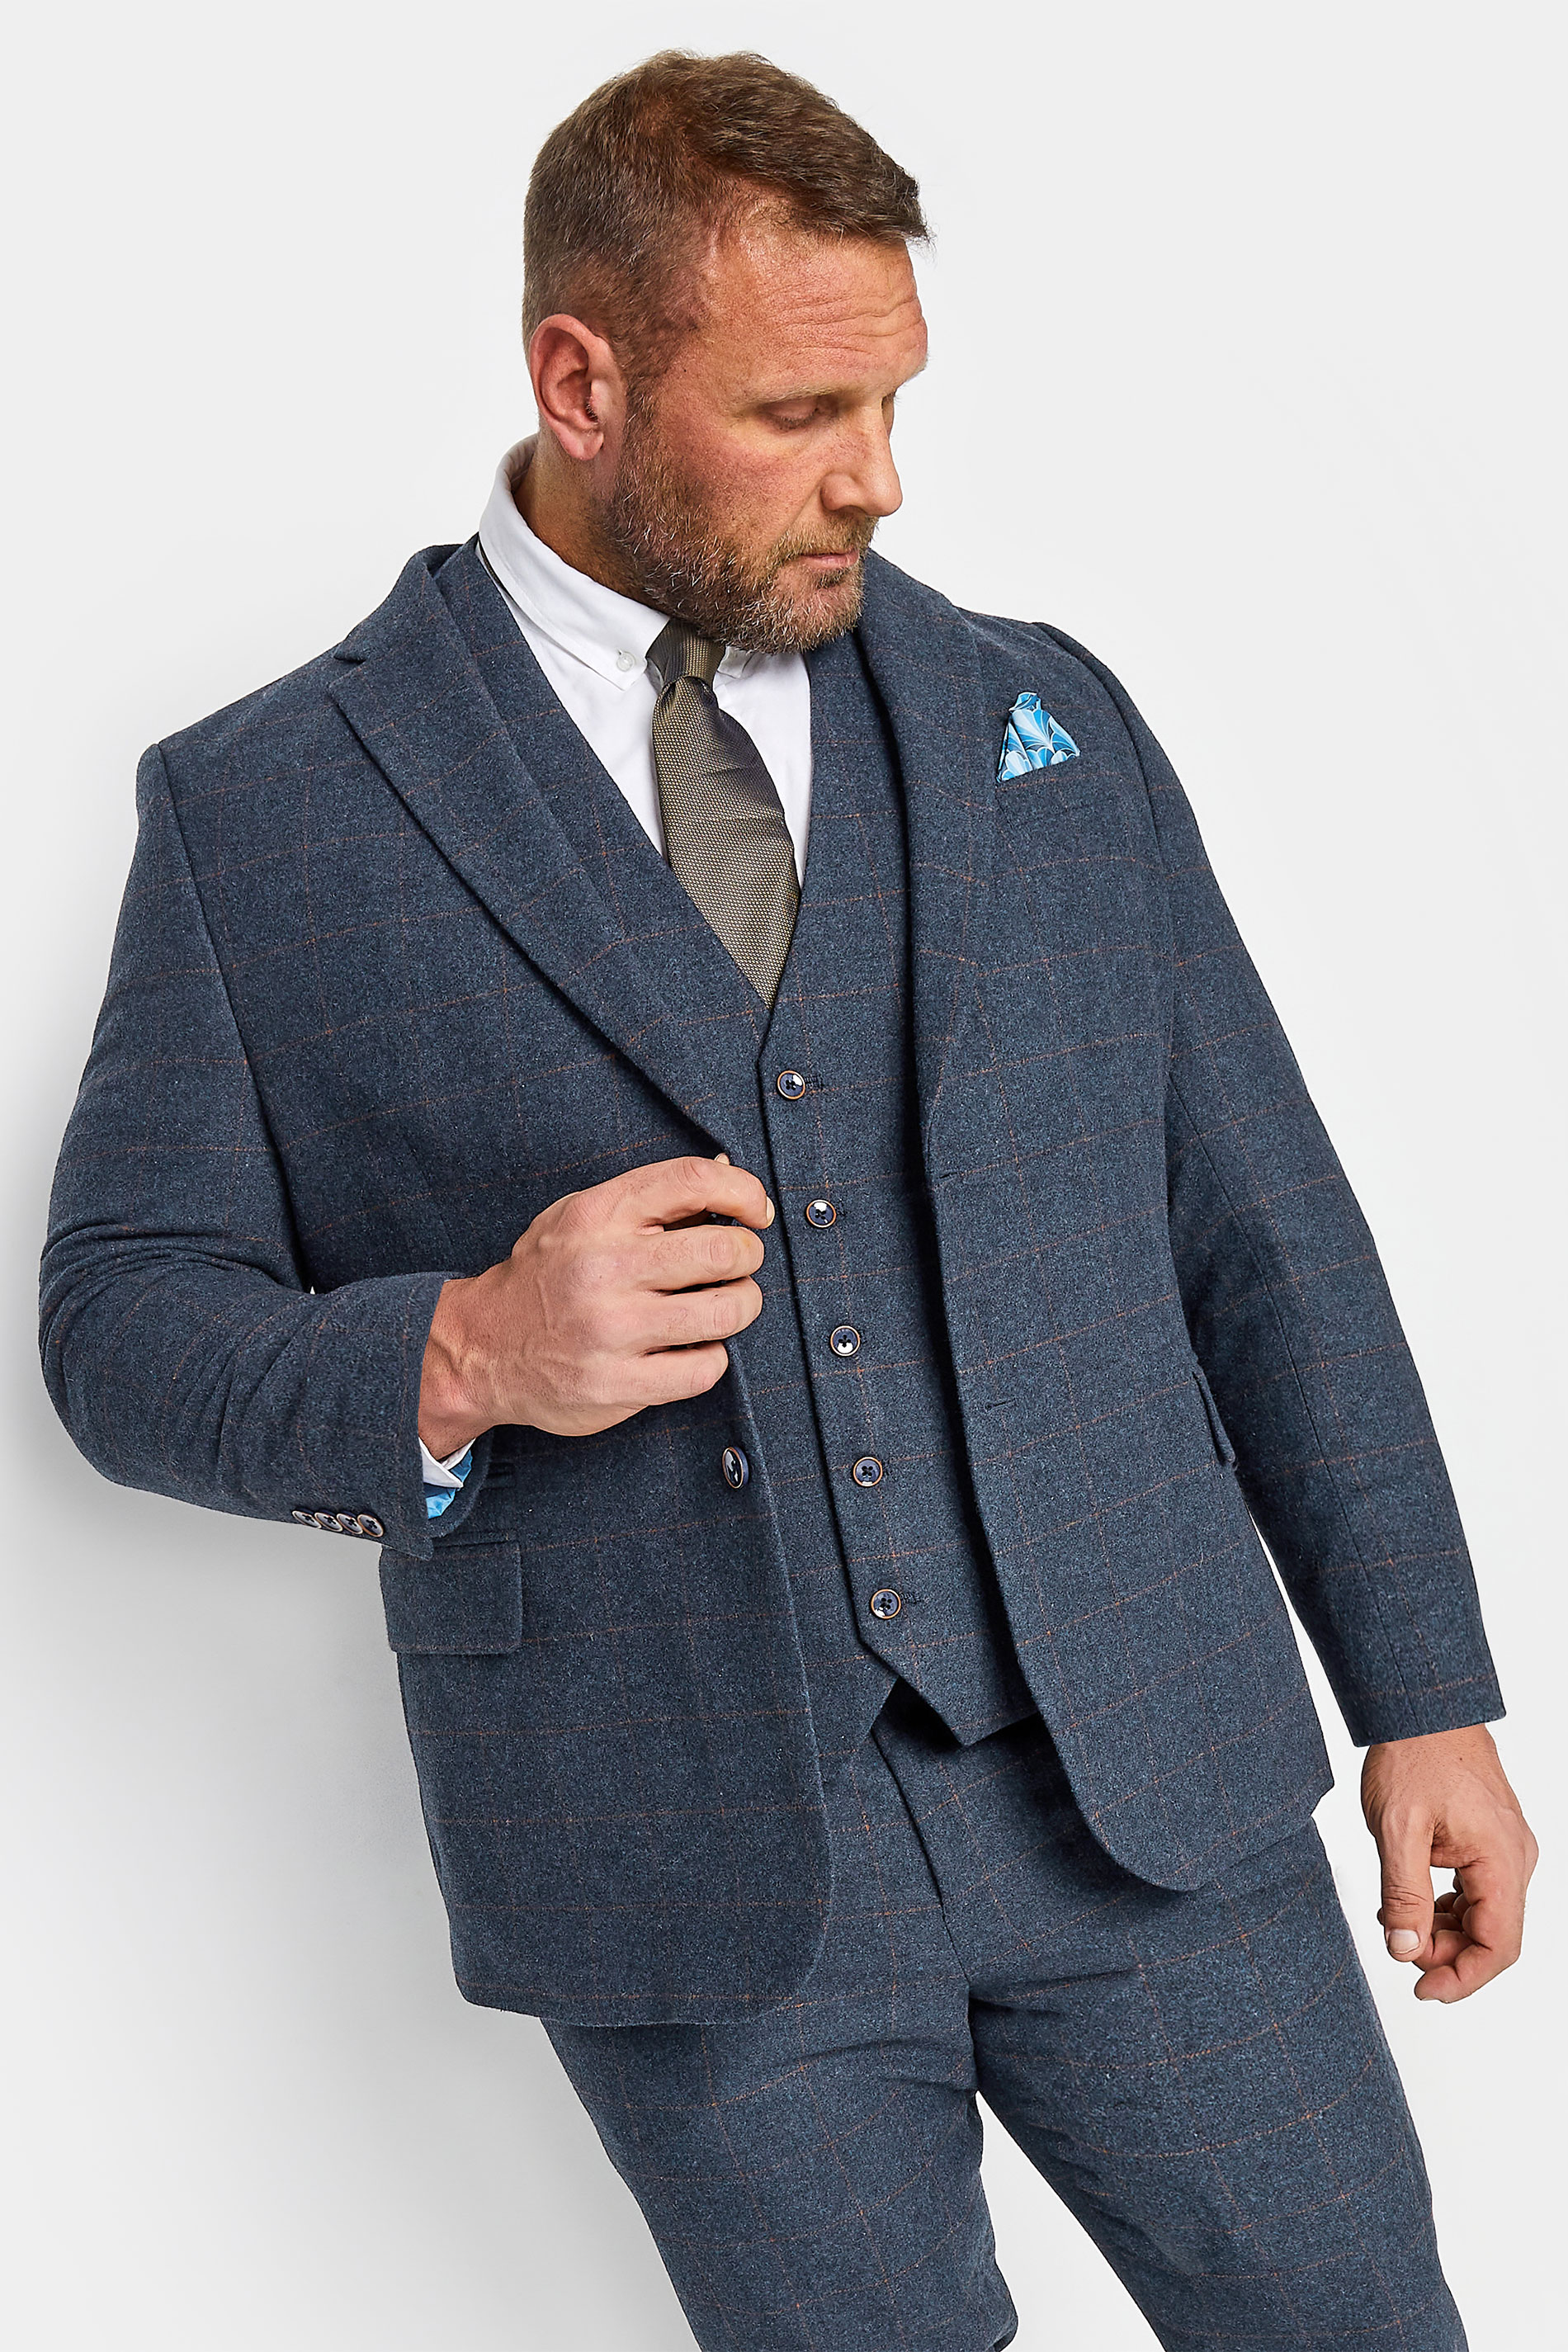 BadRhino Big & Tall Blue Tweed Check Wool Mix Suit Jacket | BadRhino 2